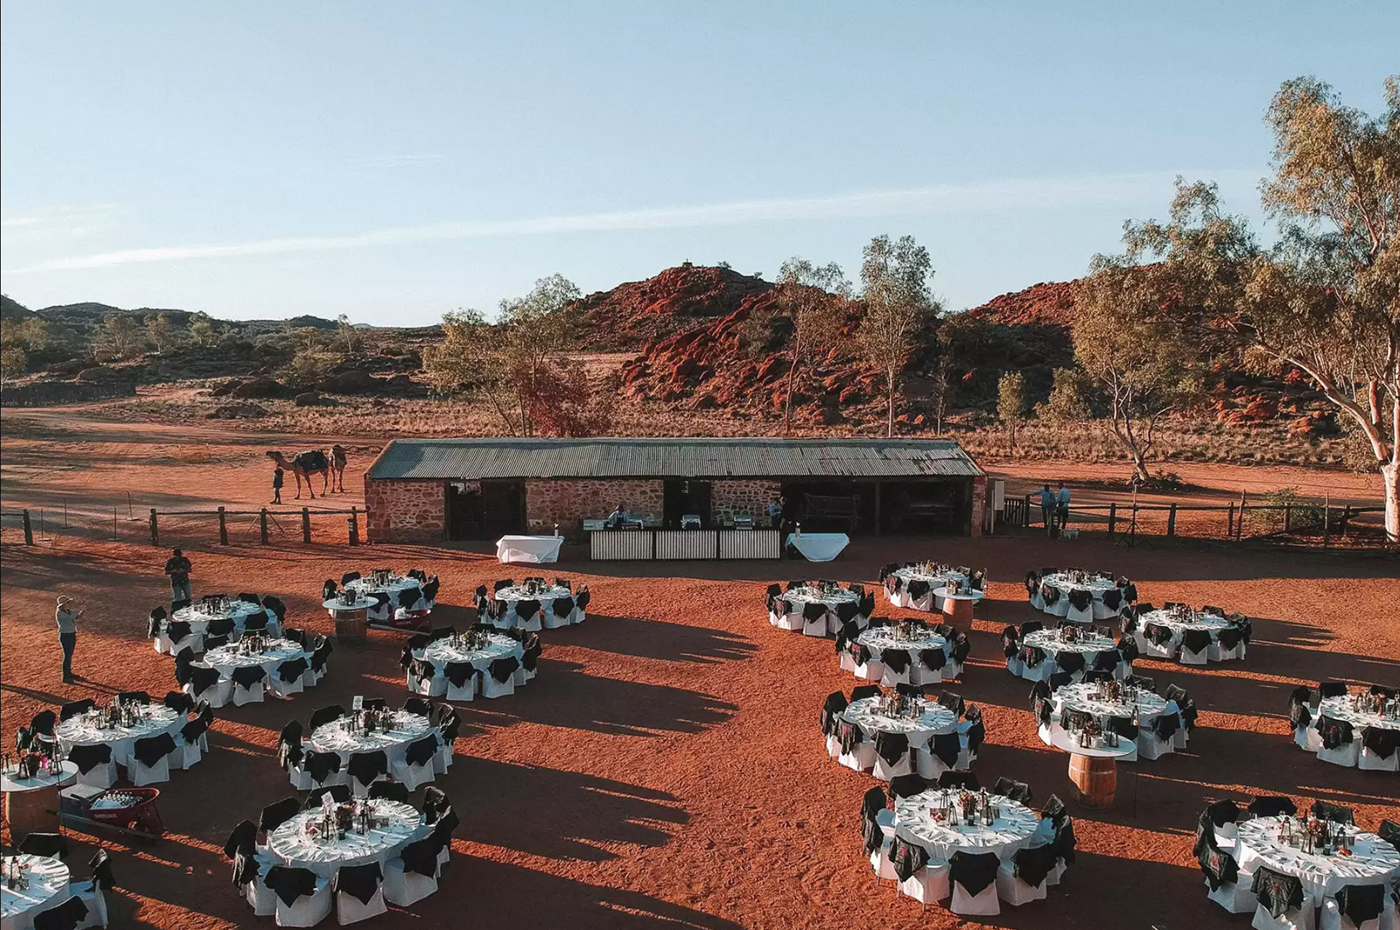 The Ghan Outback Dinner